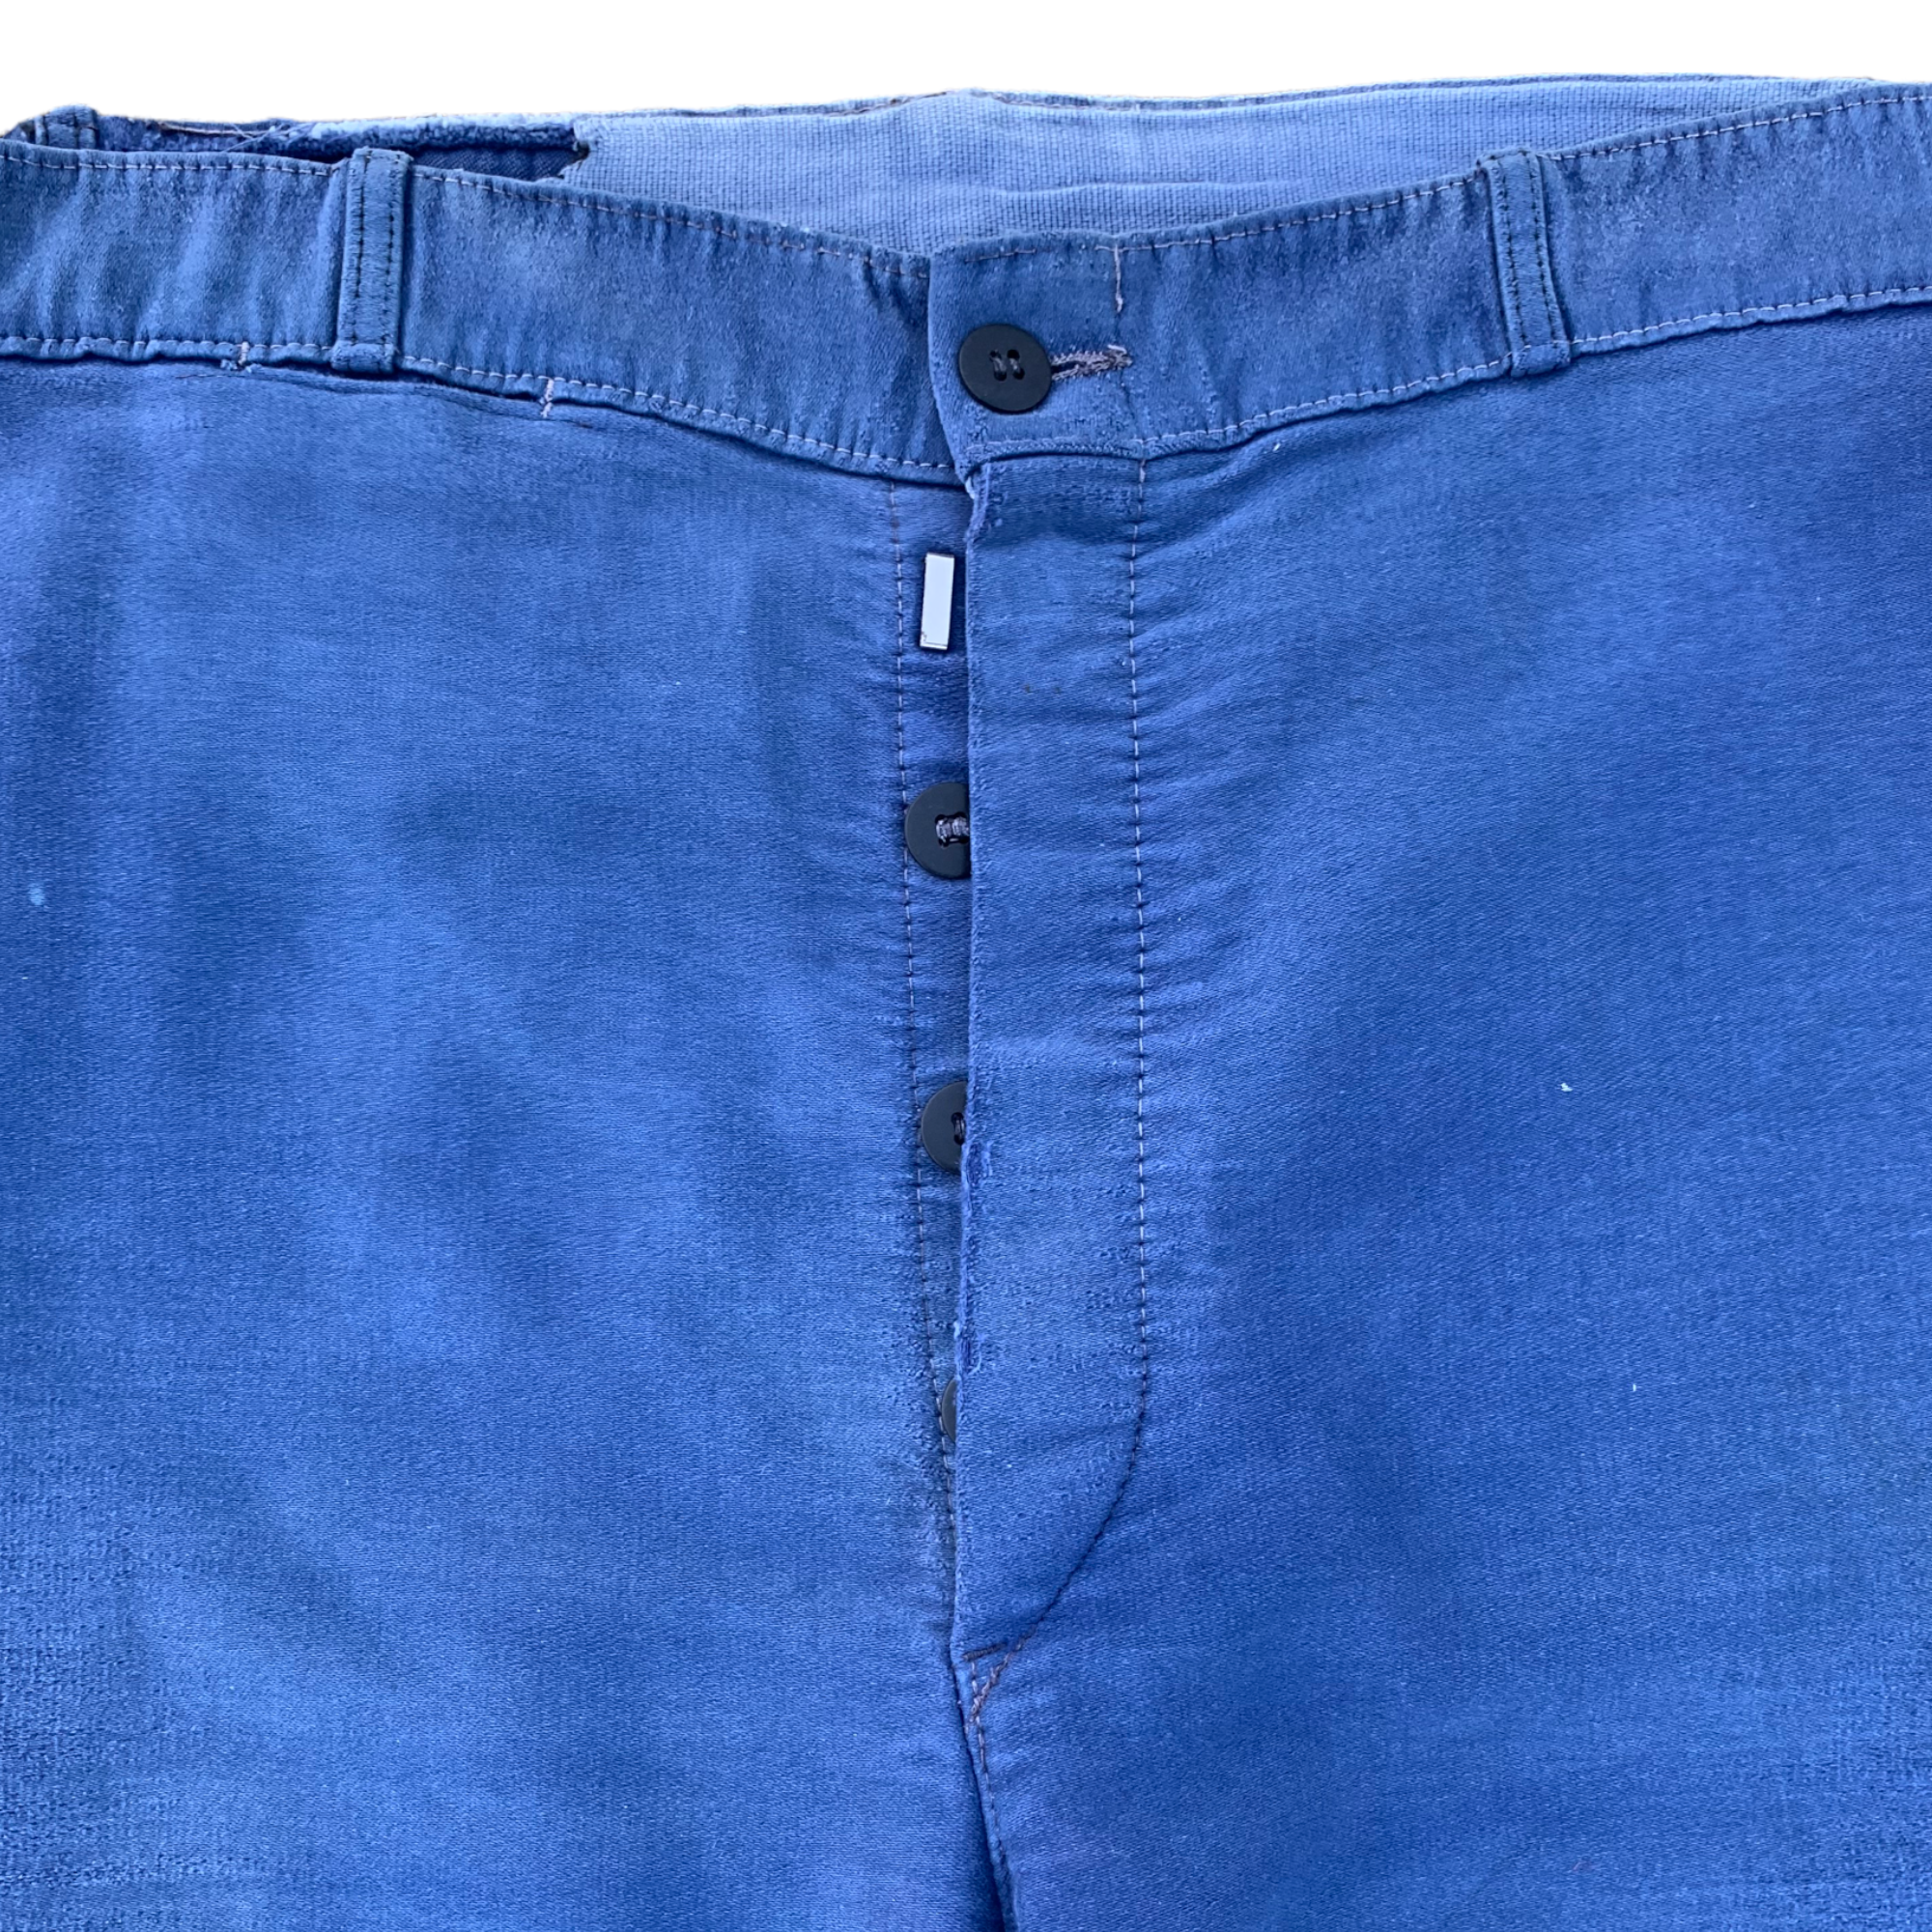 1940s French Moleskin Sashiko Repaired Work Trousers - Shades of Blue - 34x28